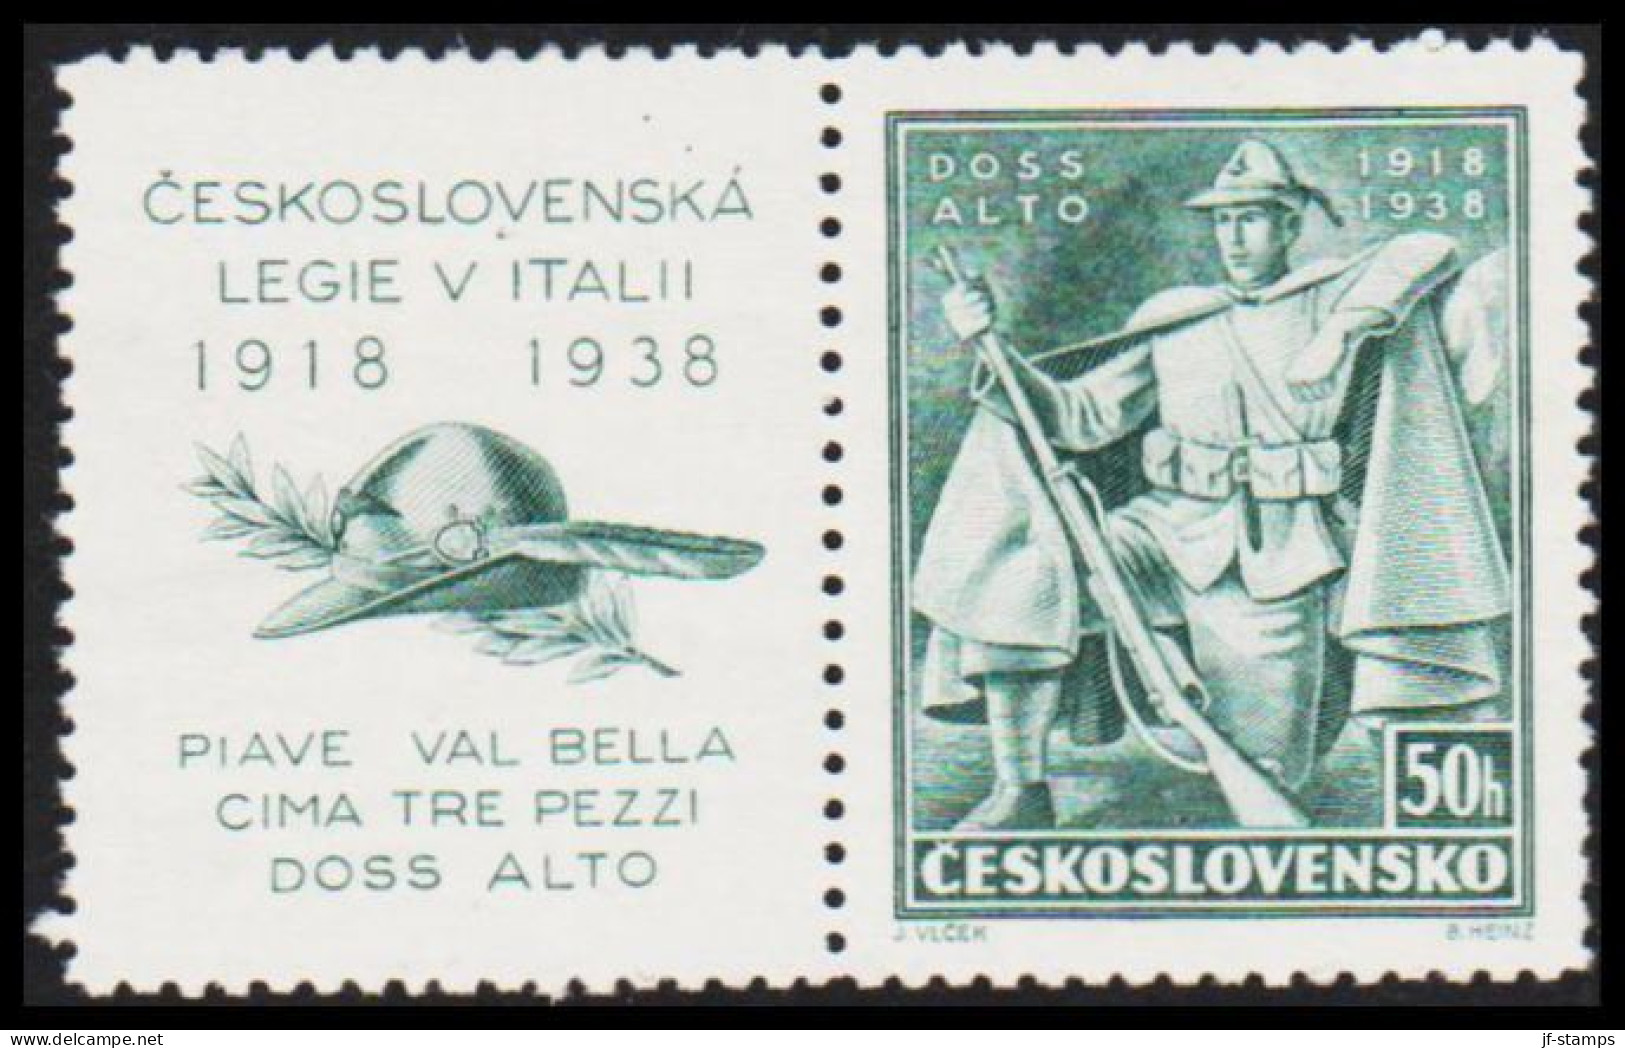 1938. CESKOSLOVENSKO.  Doss Alto (Italien) 50 H  With Vignette Never Hinged.  (Michel 394Zf) - JF540120 - Unused Stamps